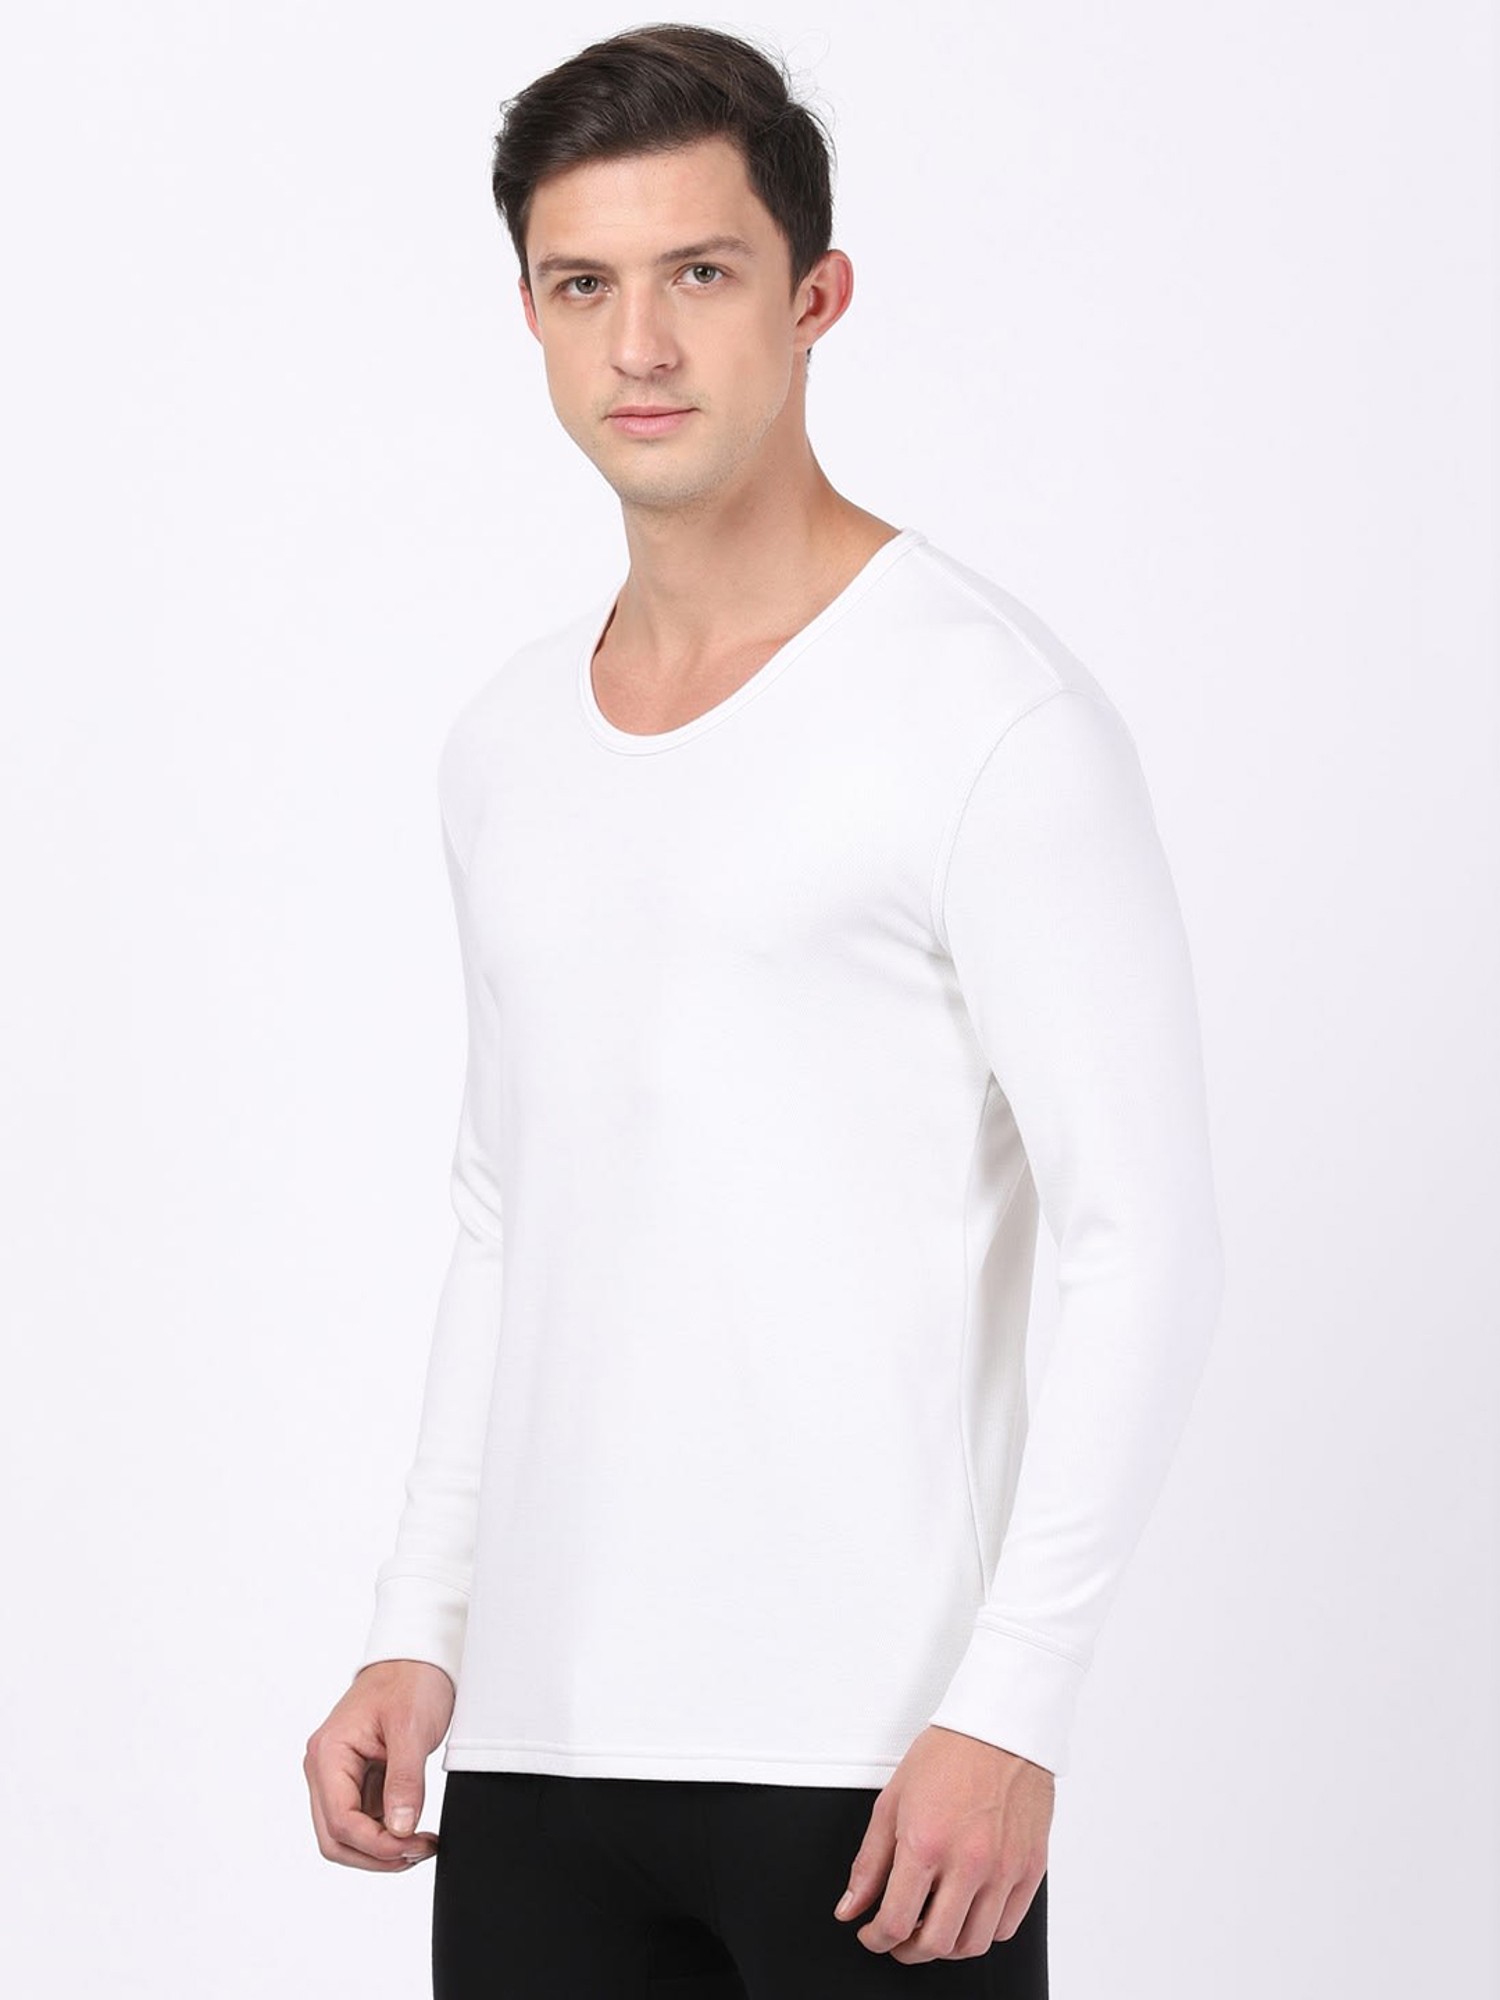 Buy Jockey White Regular Fit Thermal Top for Men's Online @ Tata CLiQ